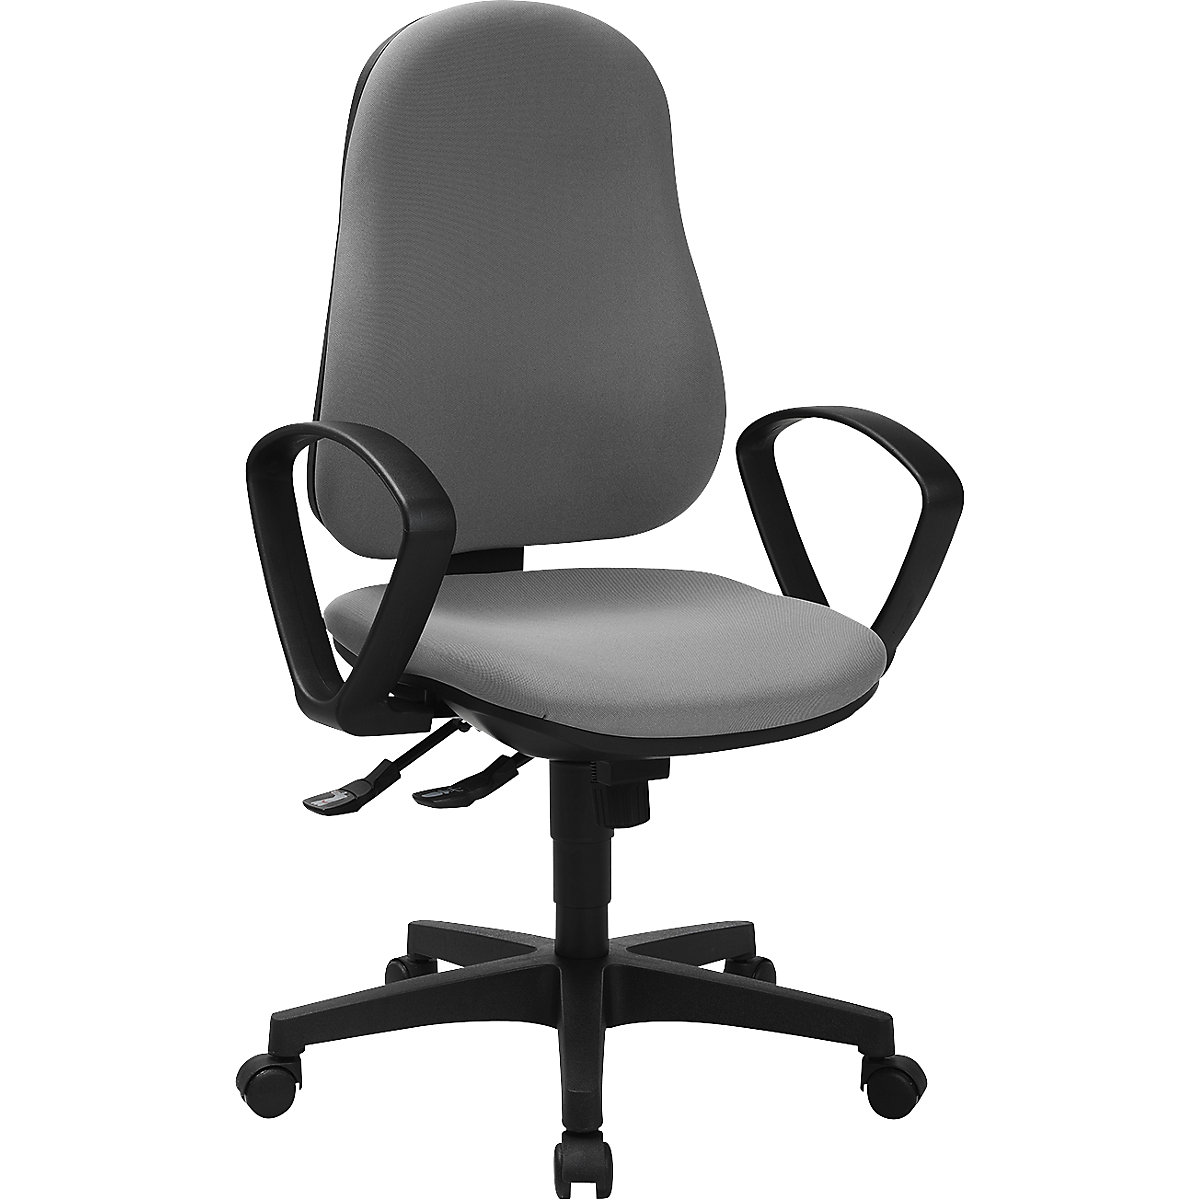 SUPPORT SY ergonomic swivel chair - Topstar